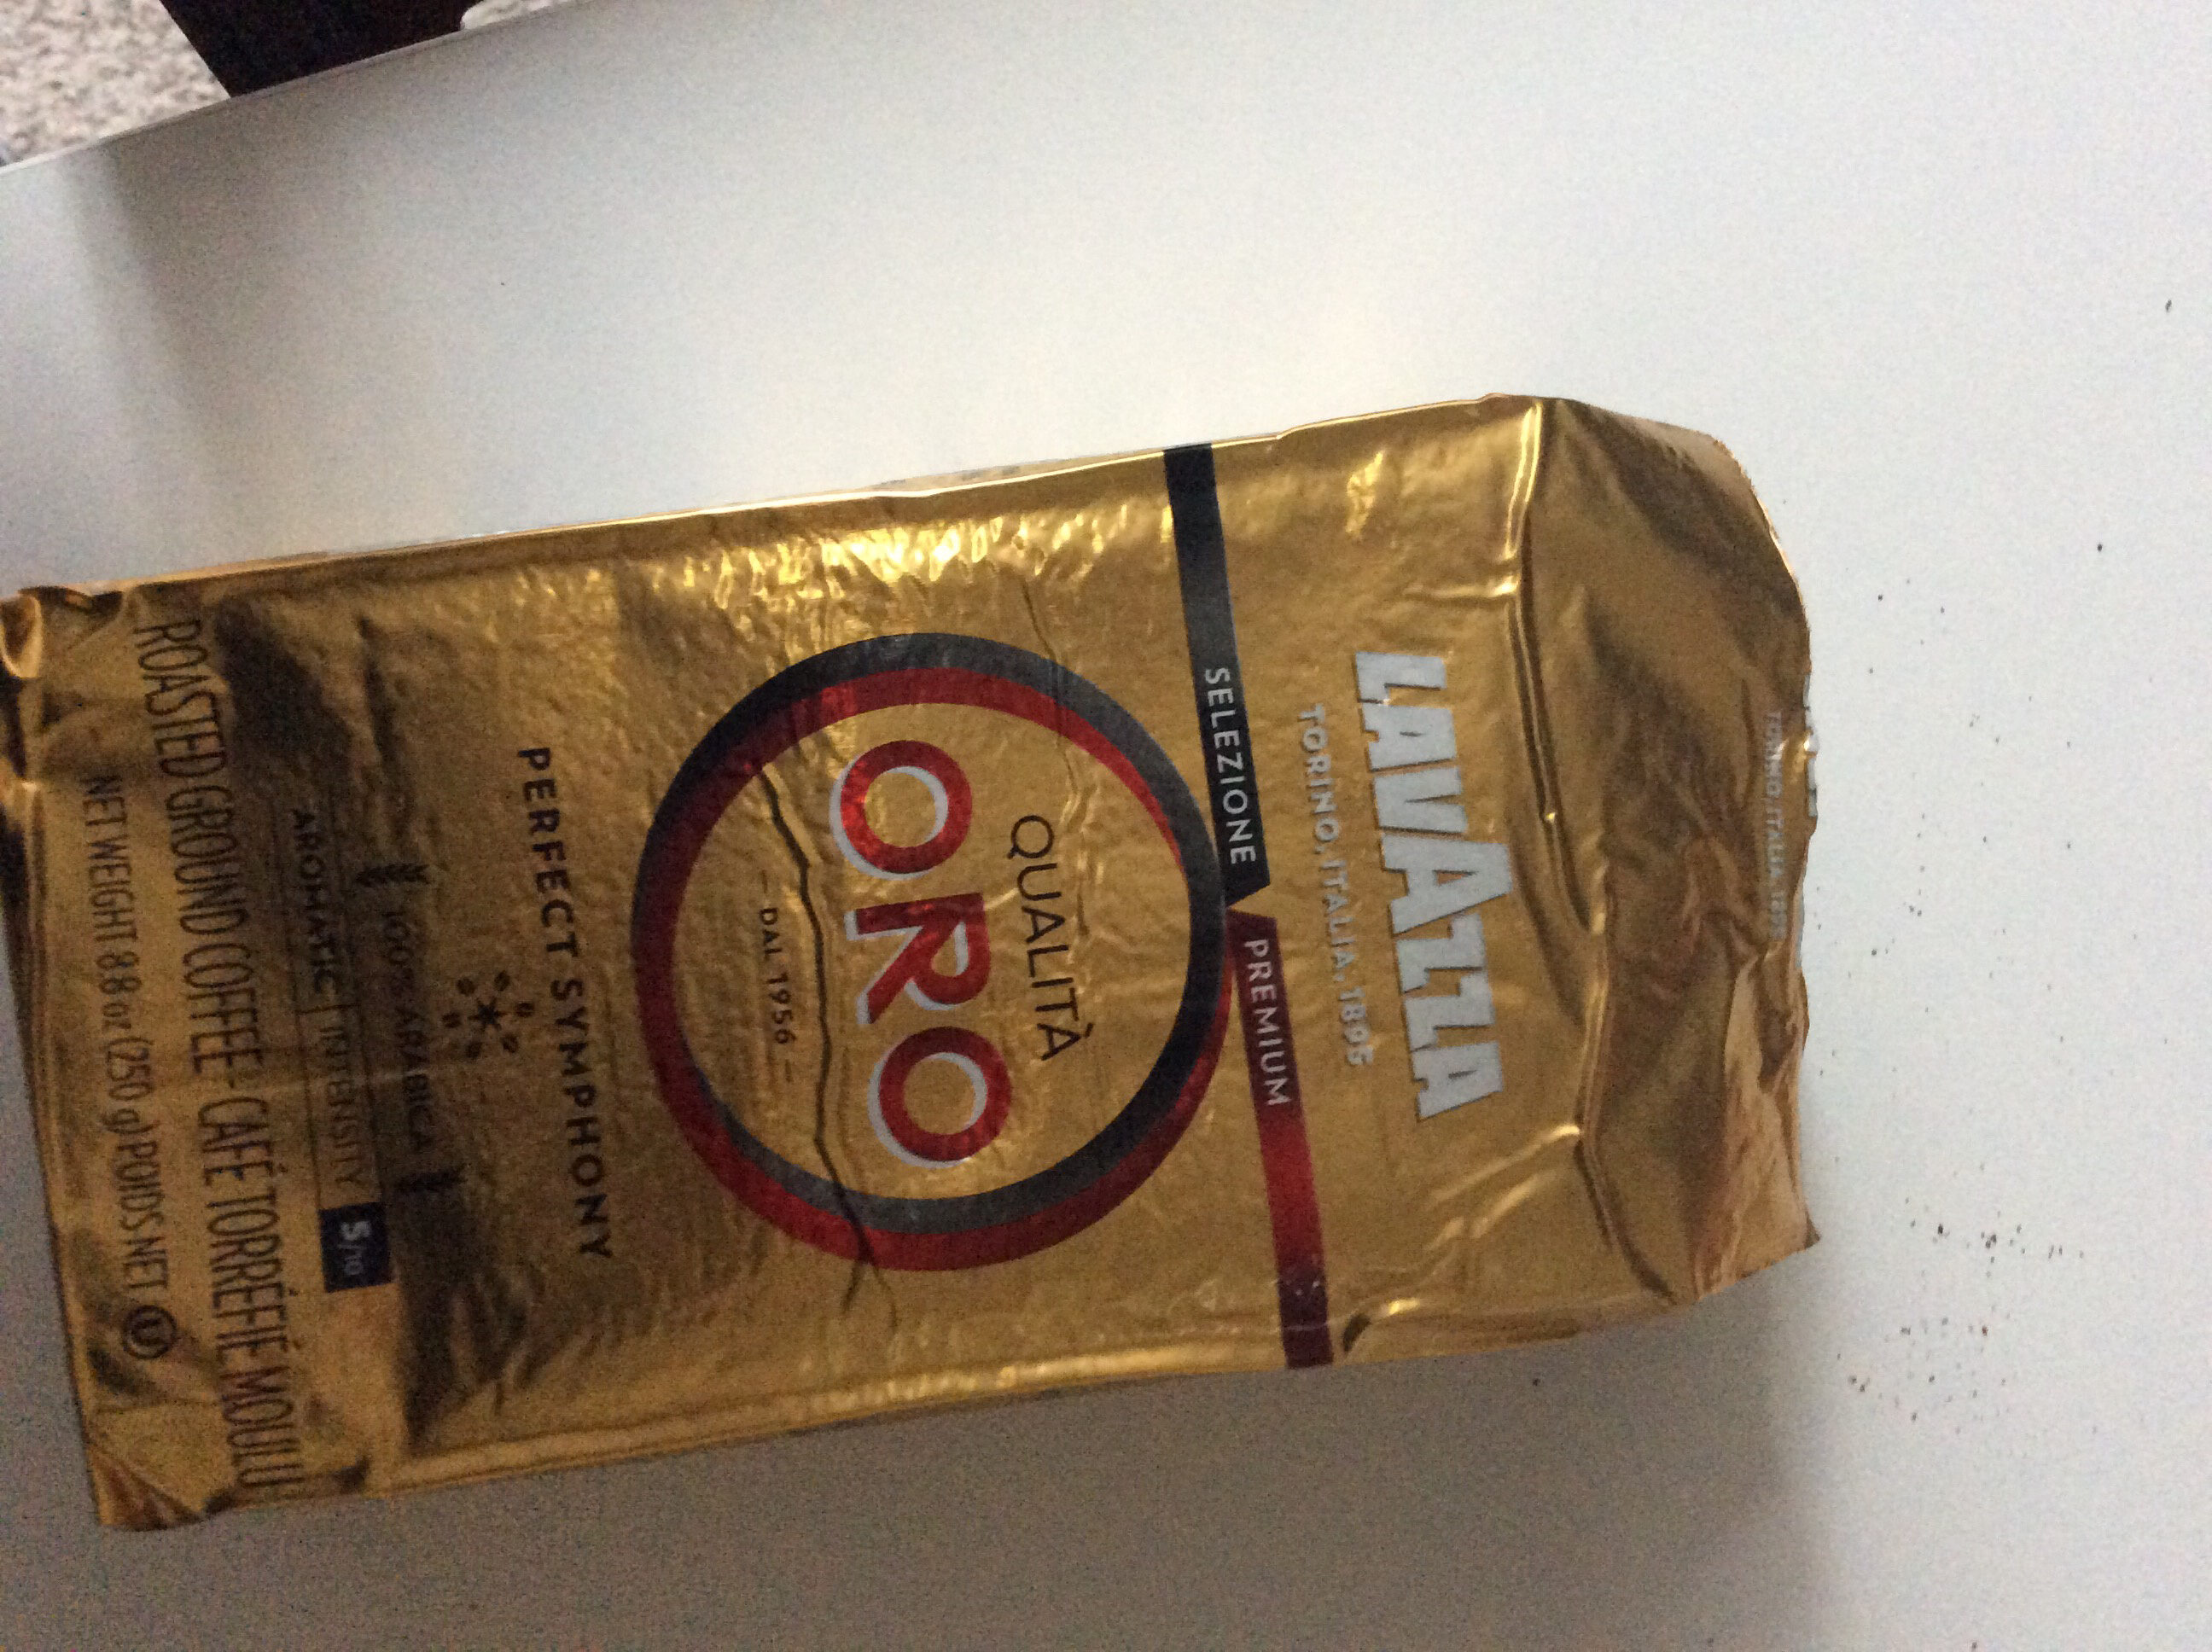 Ground coffee qualita oro - Product